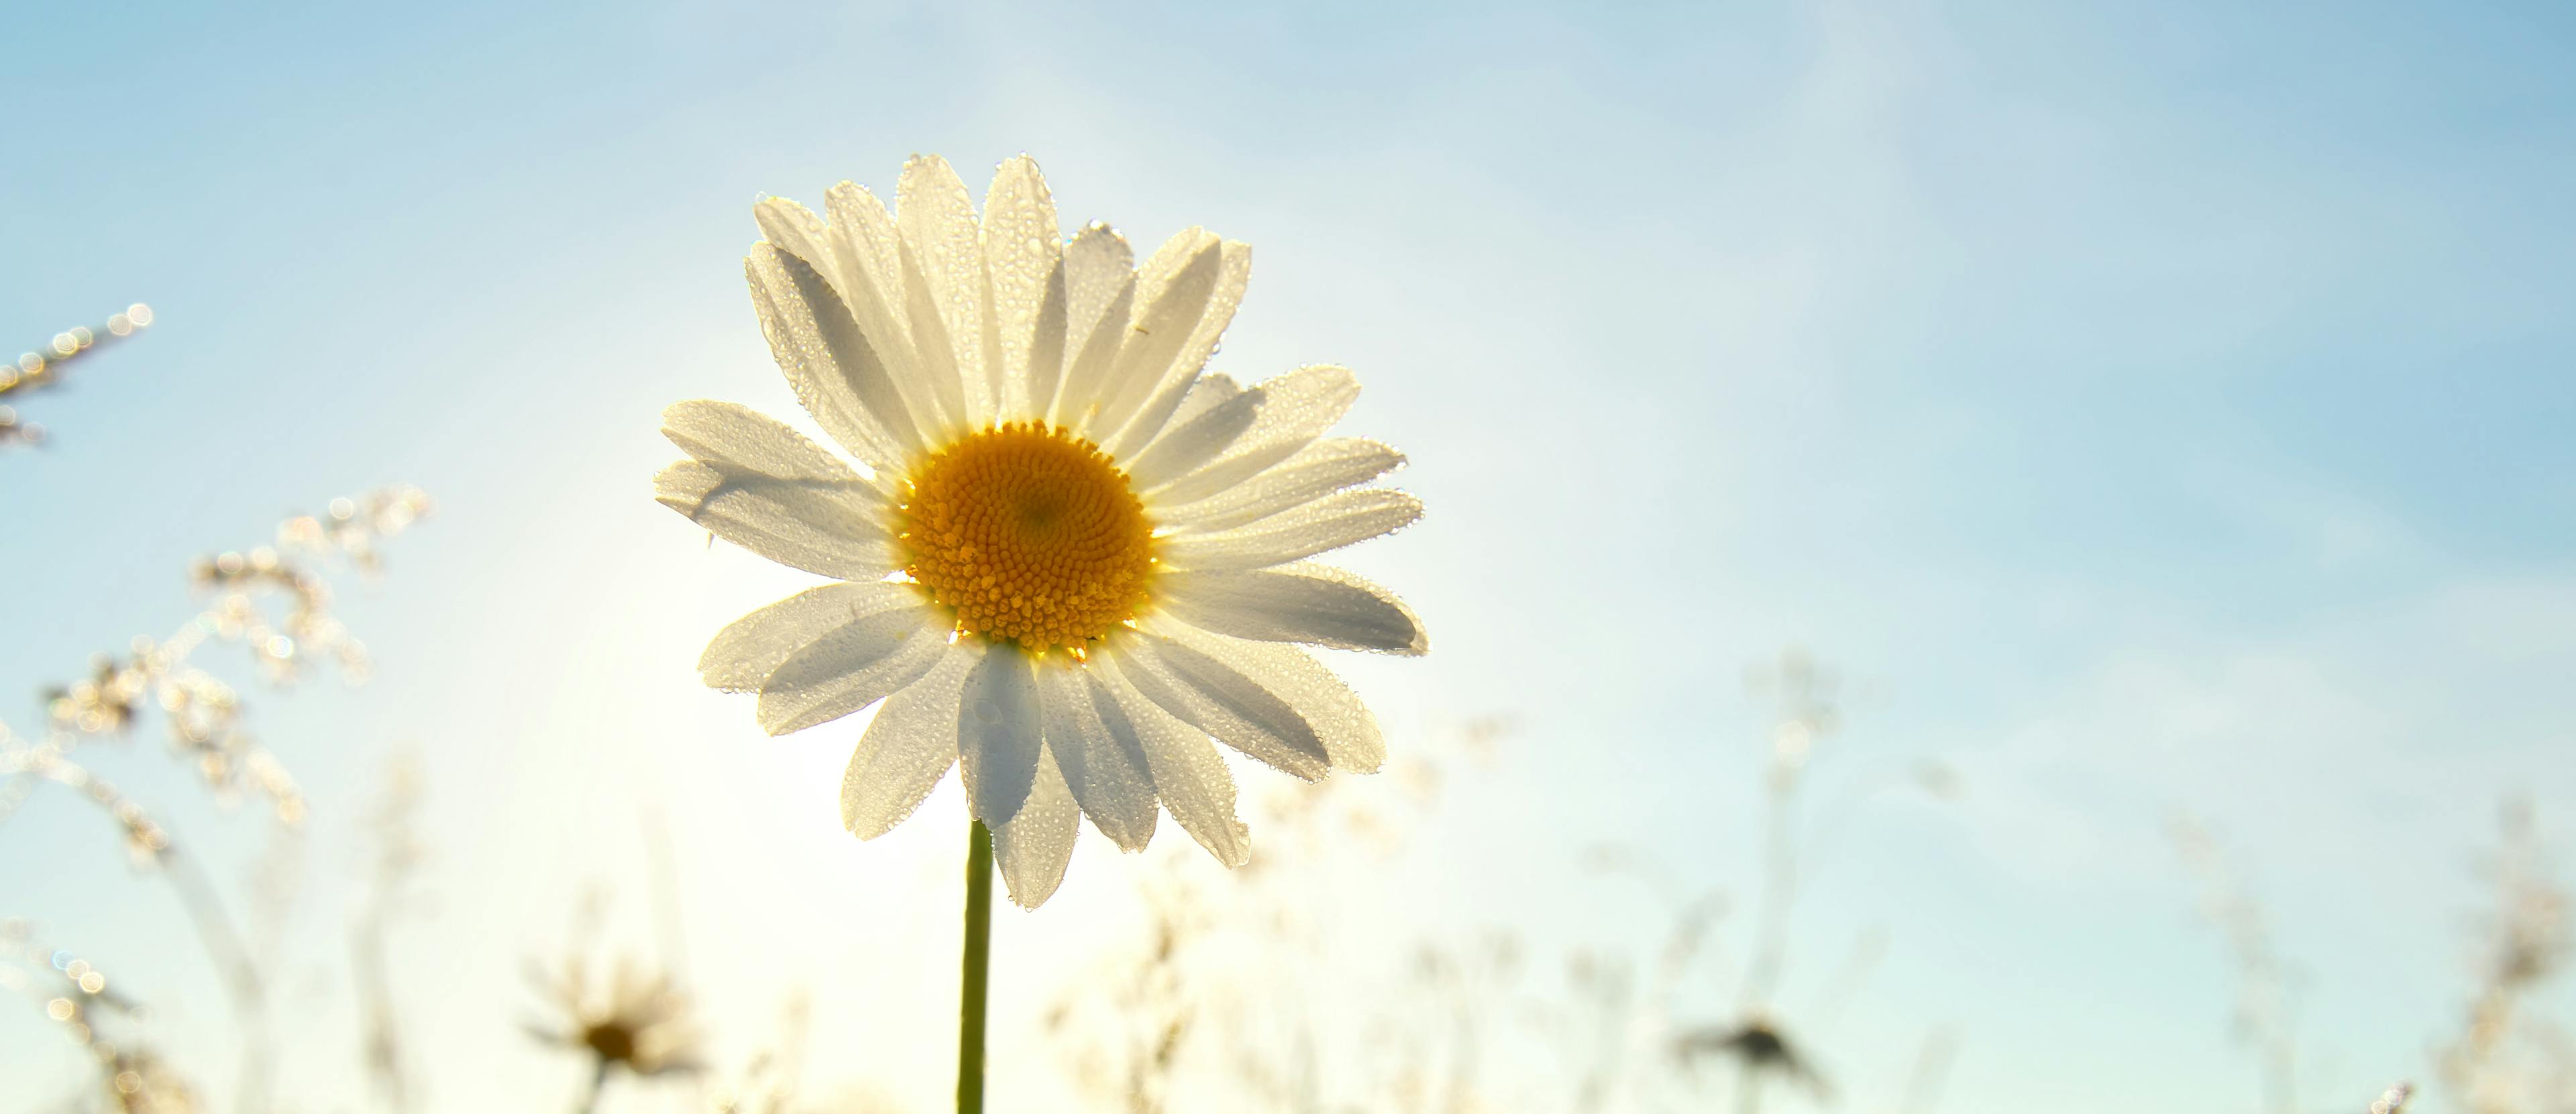 Sun daisy portrait